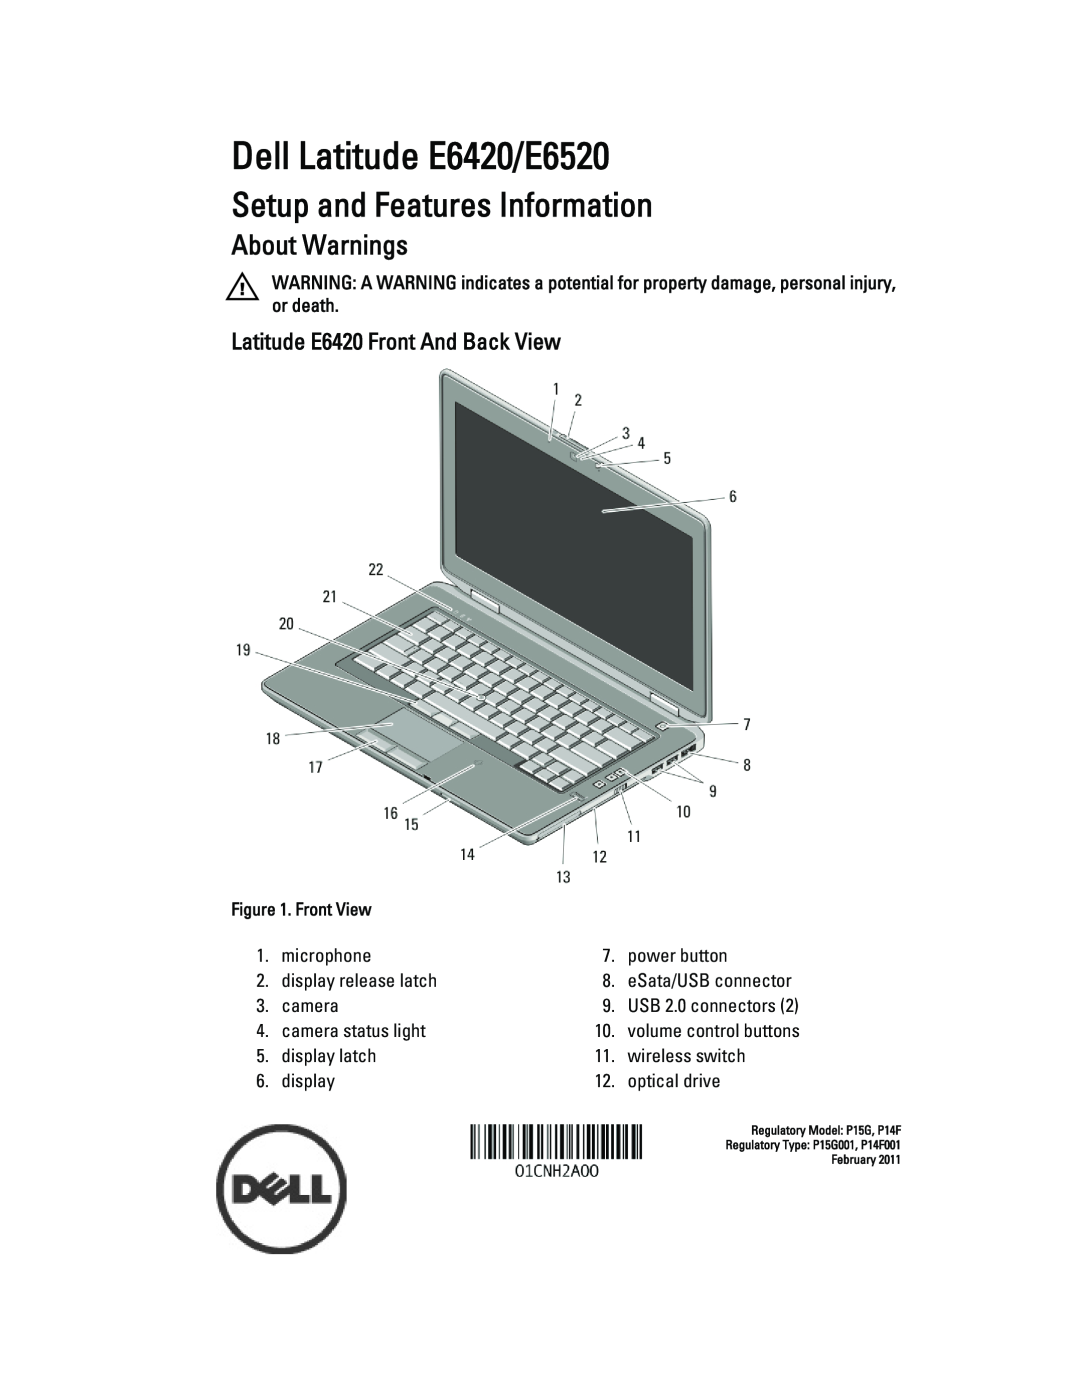 Dell owner manual Dell Latitude E6520 Owners Manual, Regulatory Model P15G Regulatory Type P15G001 